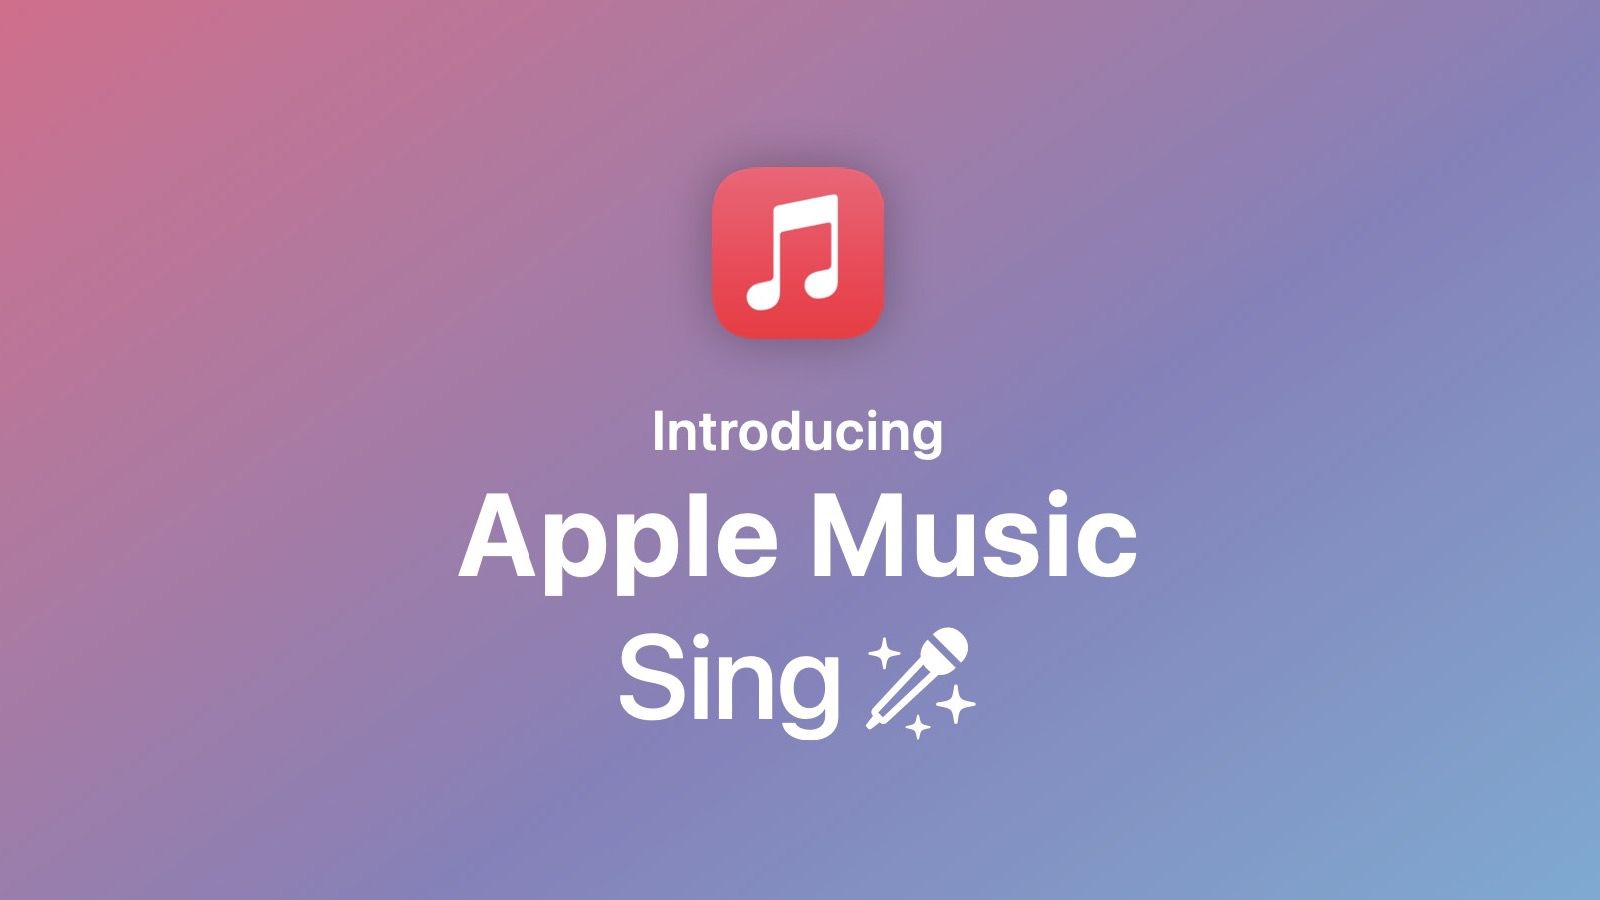 Apple Music Adding a Karaoke Experience With Apple Music Sing - macrumors.com